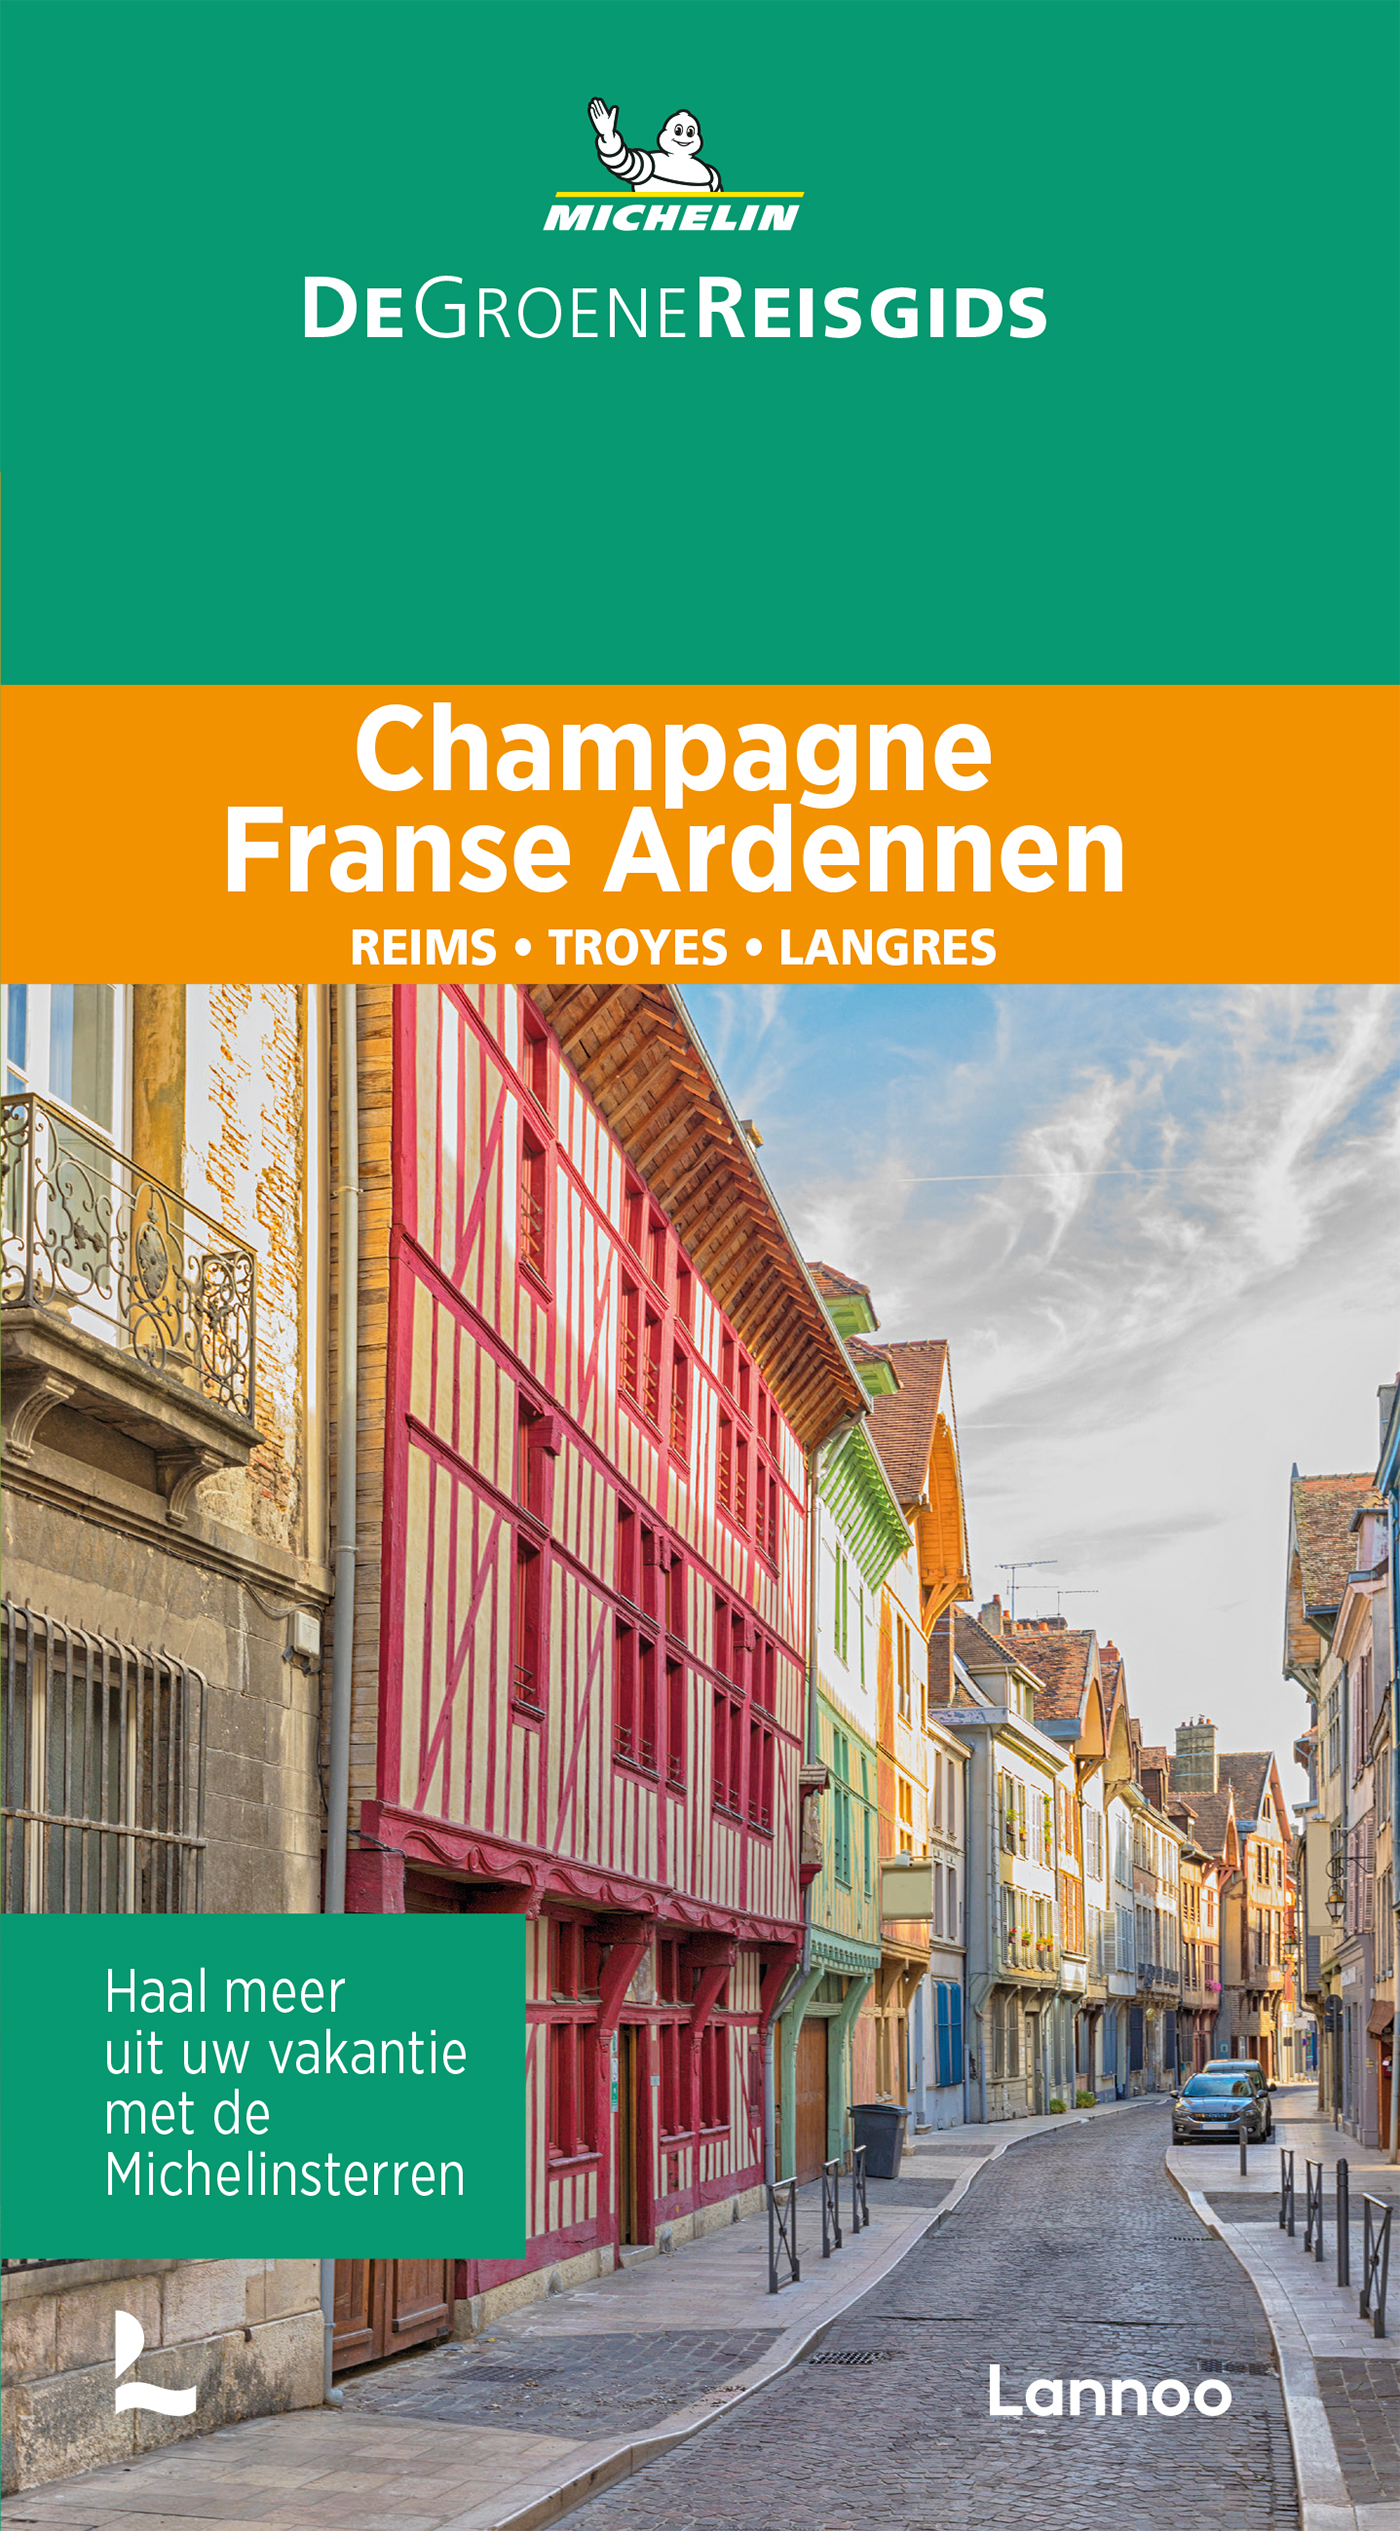 Online bestellen: Reisgids Michelin groene gids Champagne/Franse Ardennen | Lannoo